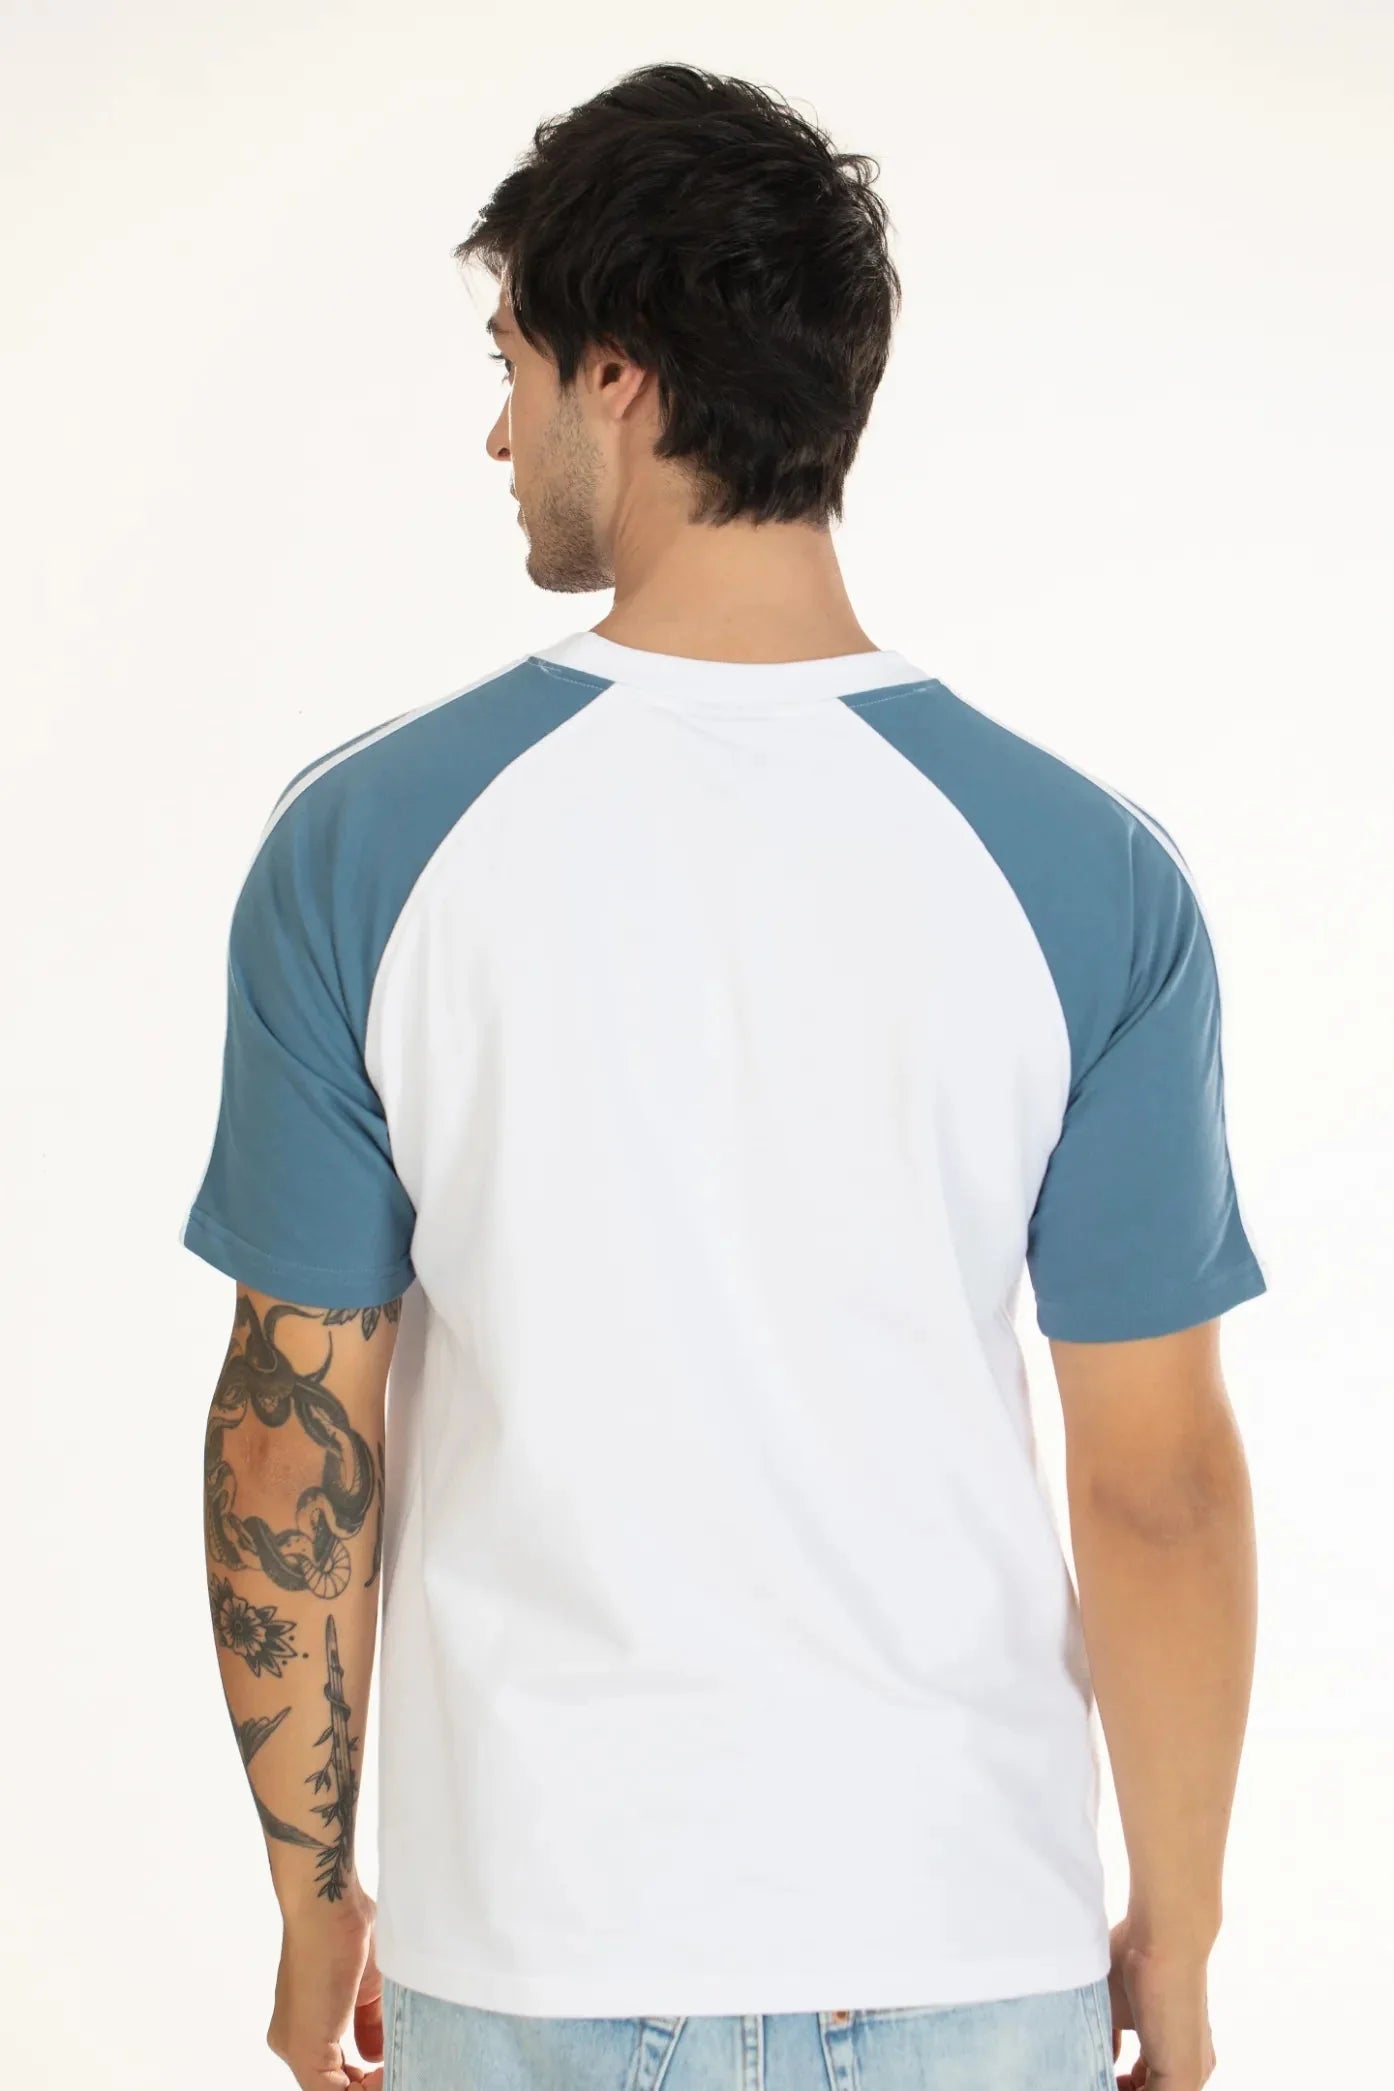 Buy Raglan Sleeve Fashion T-Shirt Online